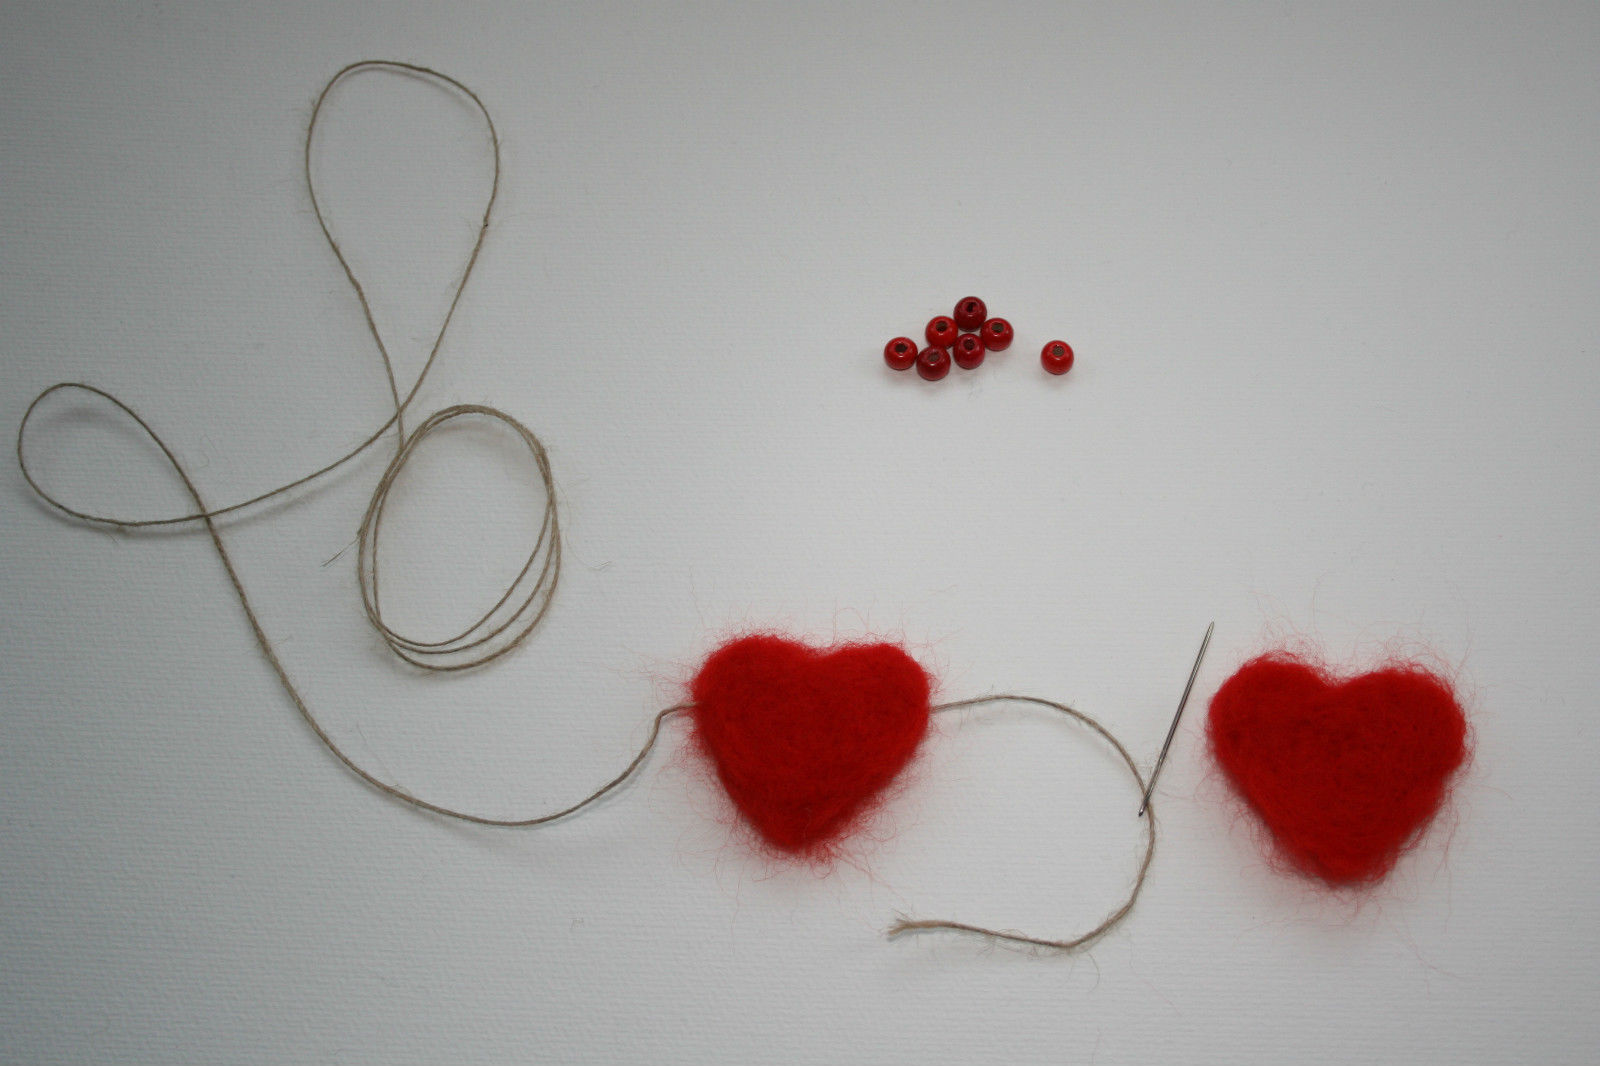 Rainbow Heart Garland Needle Felting Kit Beginner Friendly Includes Video  Instructions DIY Craft Gift Valentine's Day 